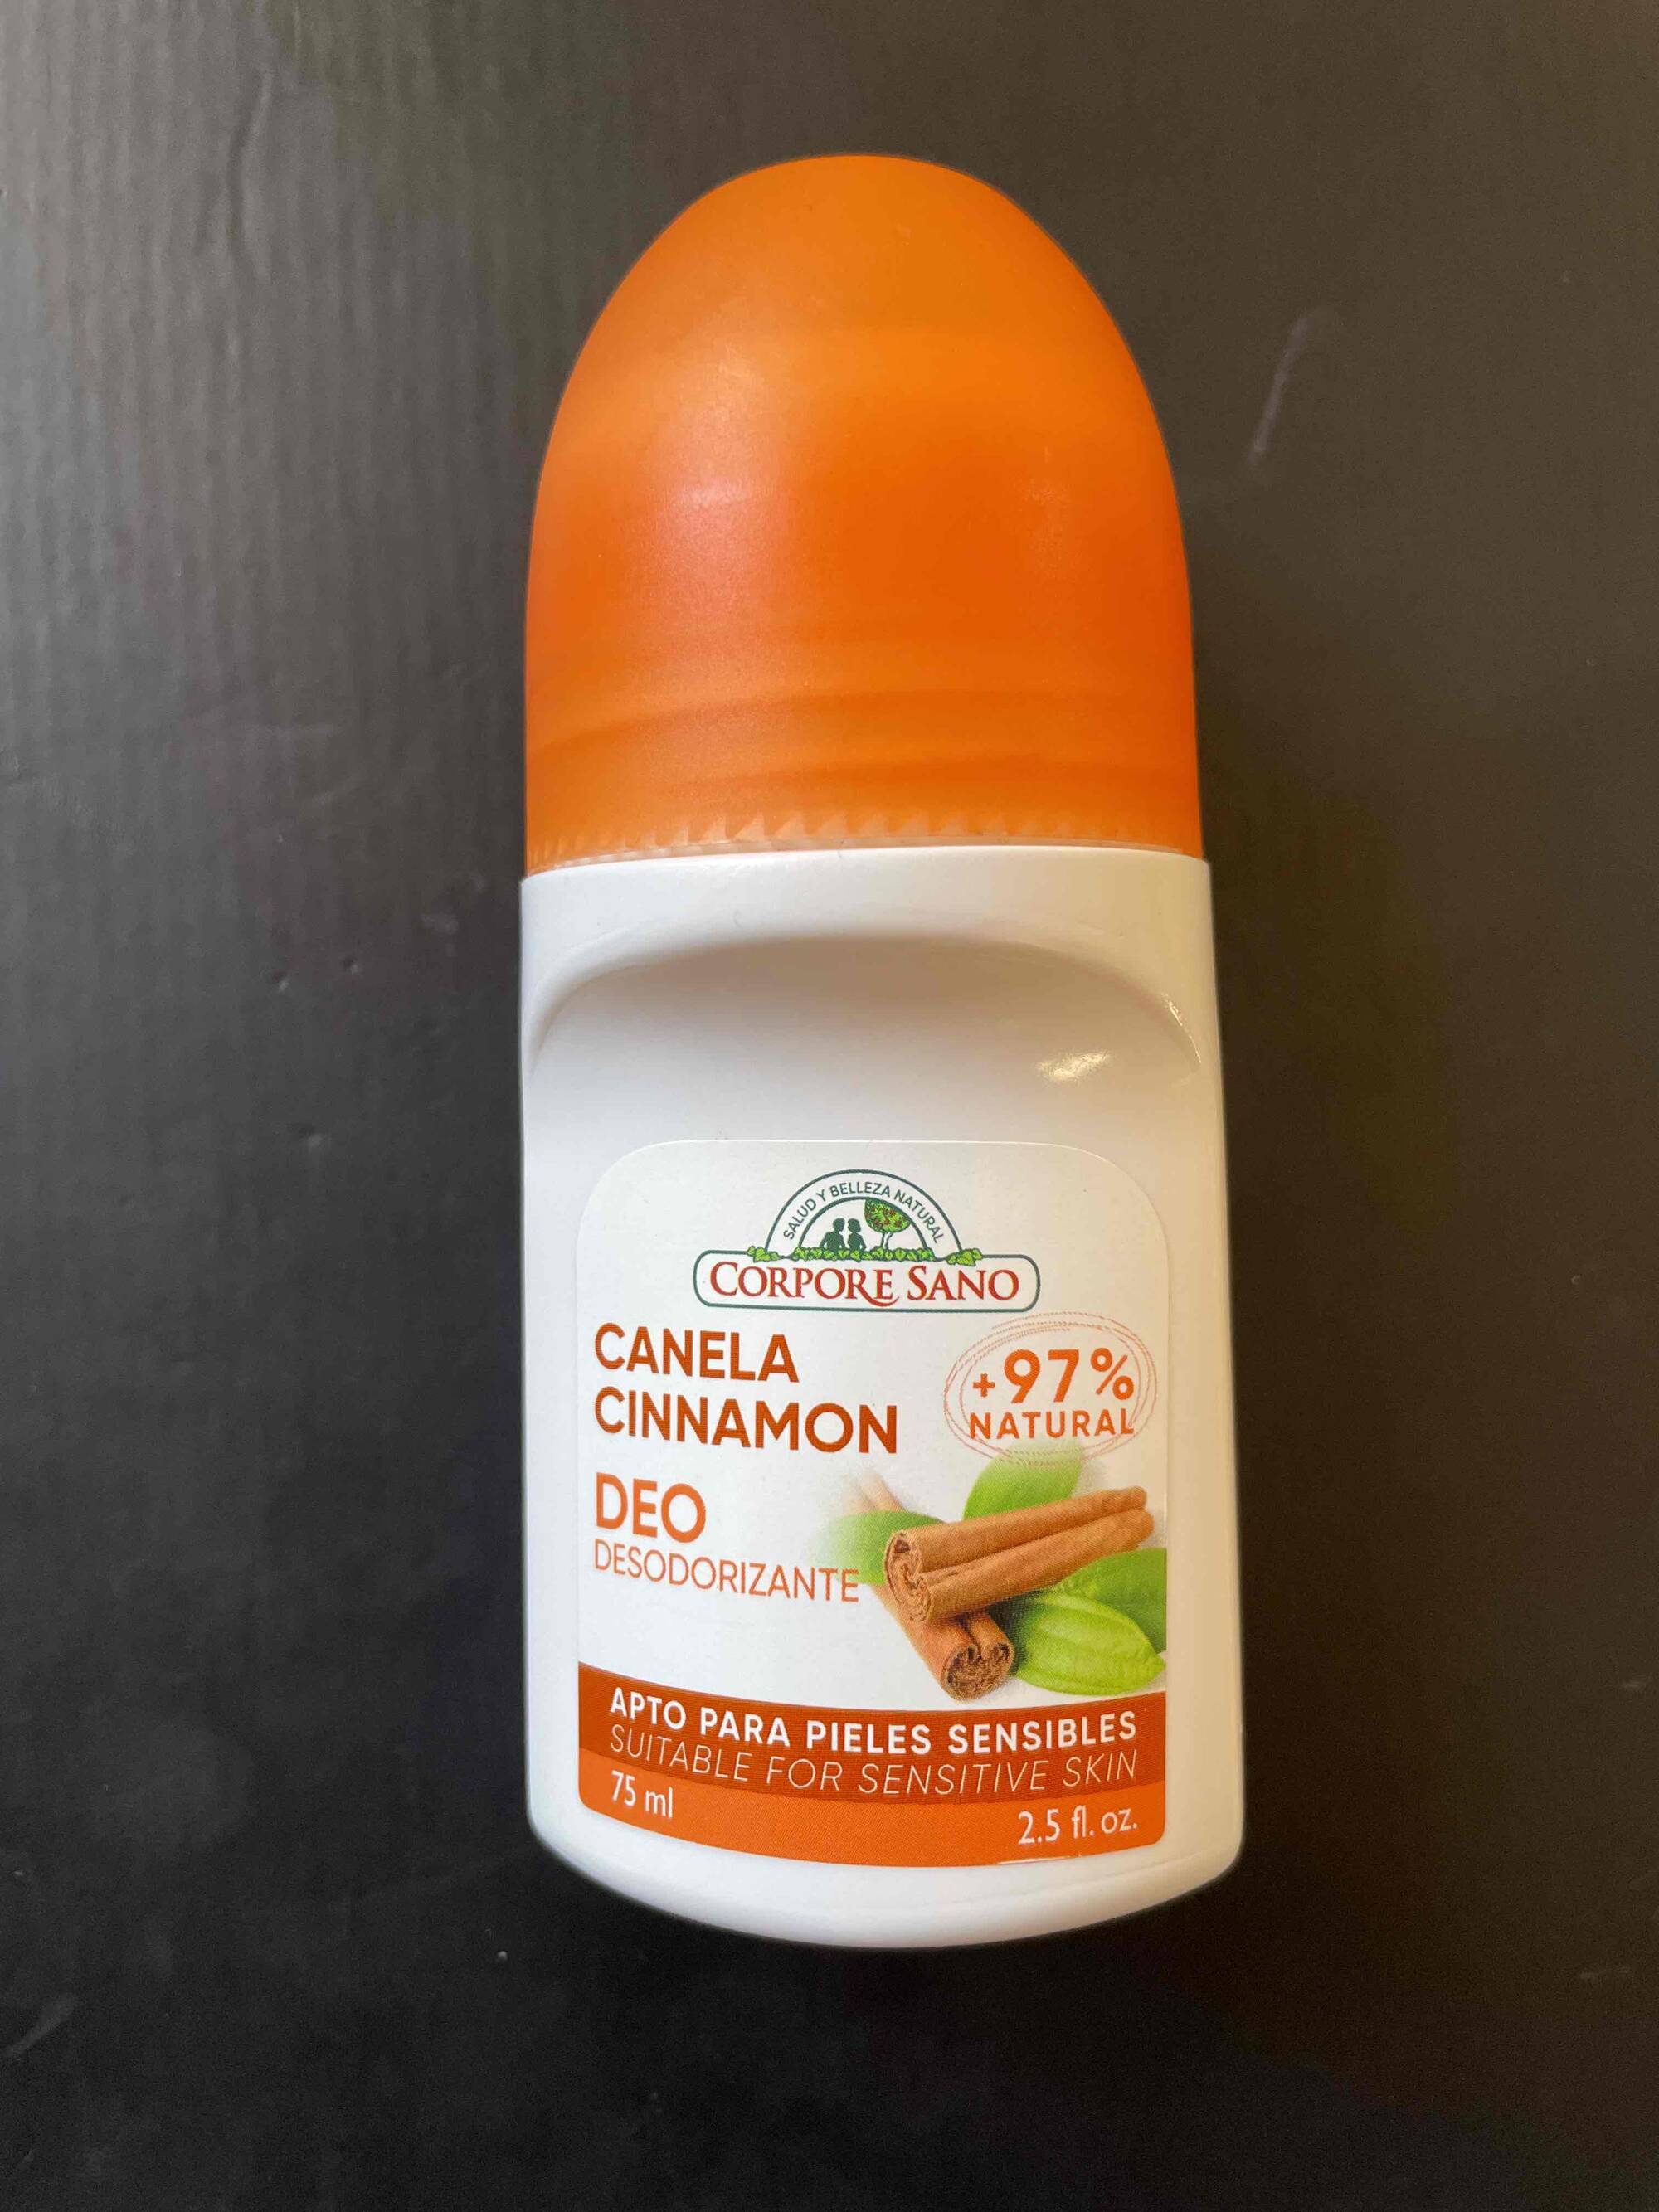 CORPORE SANO - Canela cinnamon - Deo desodorizante